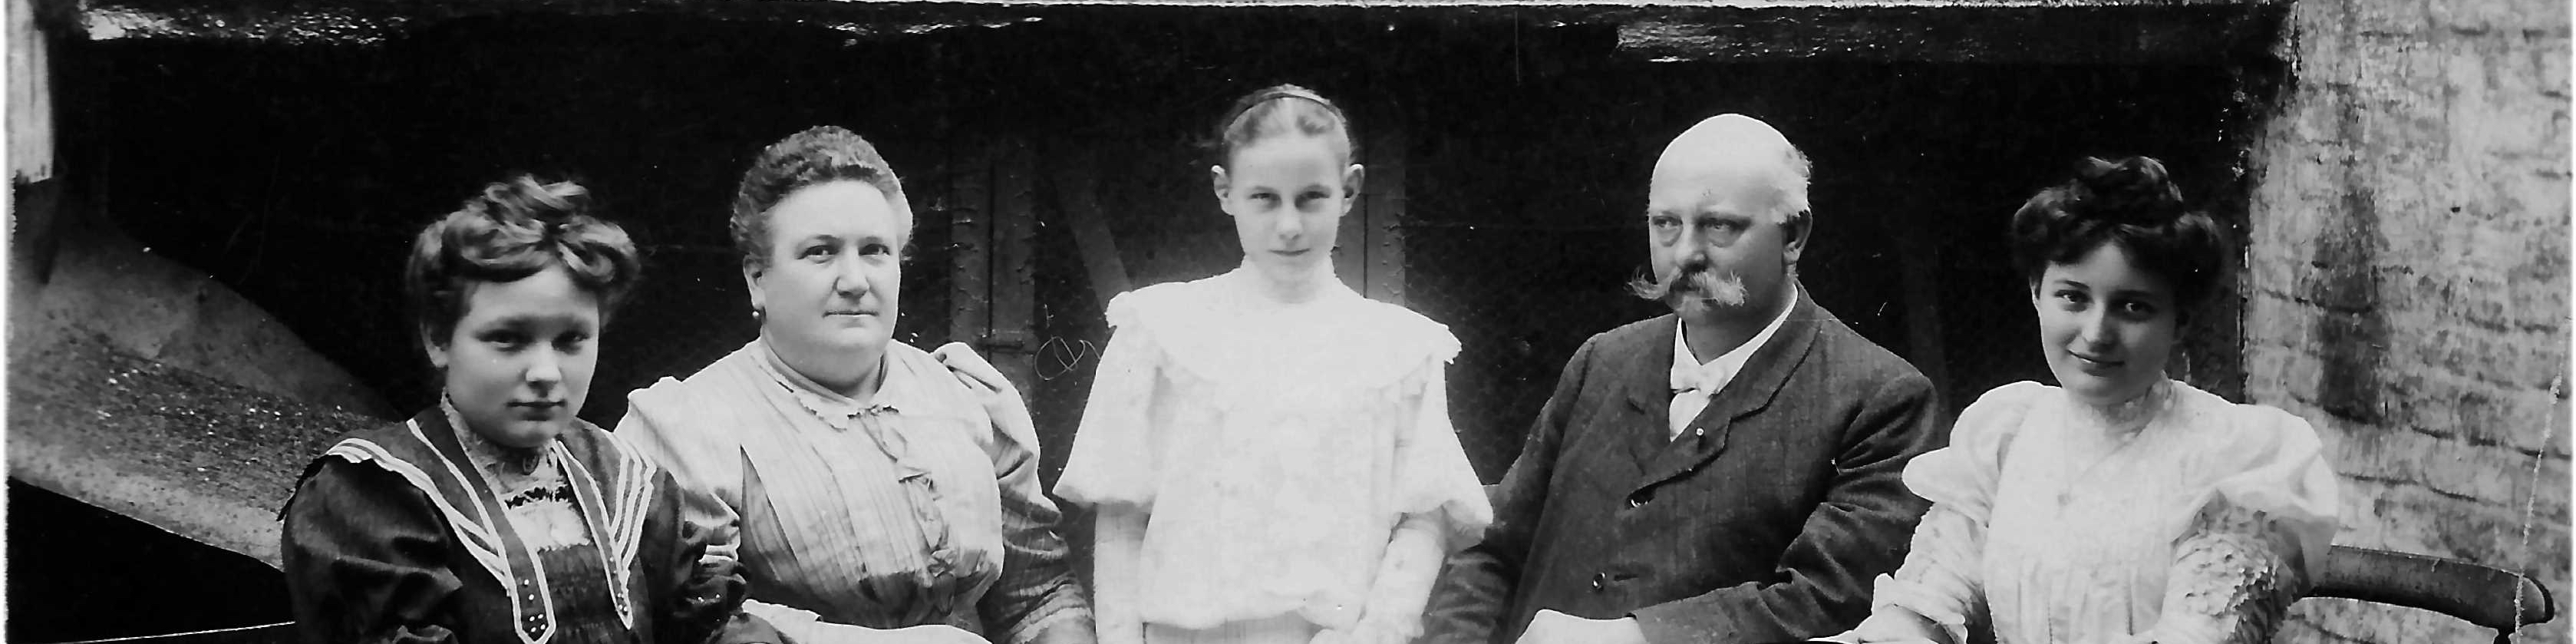 Familie Kuhles 1900